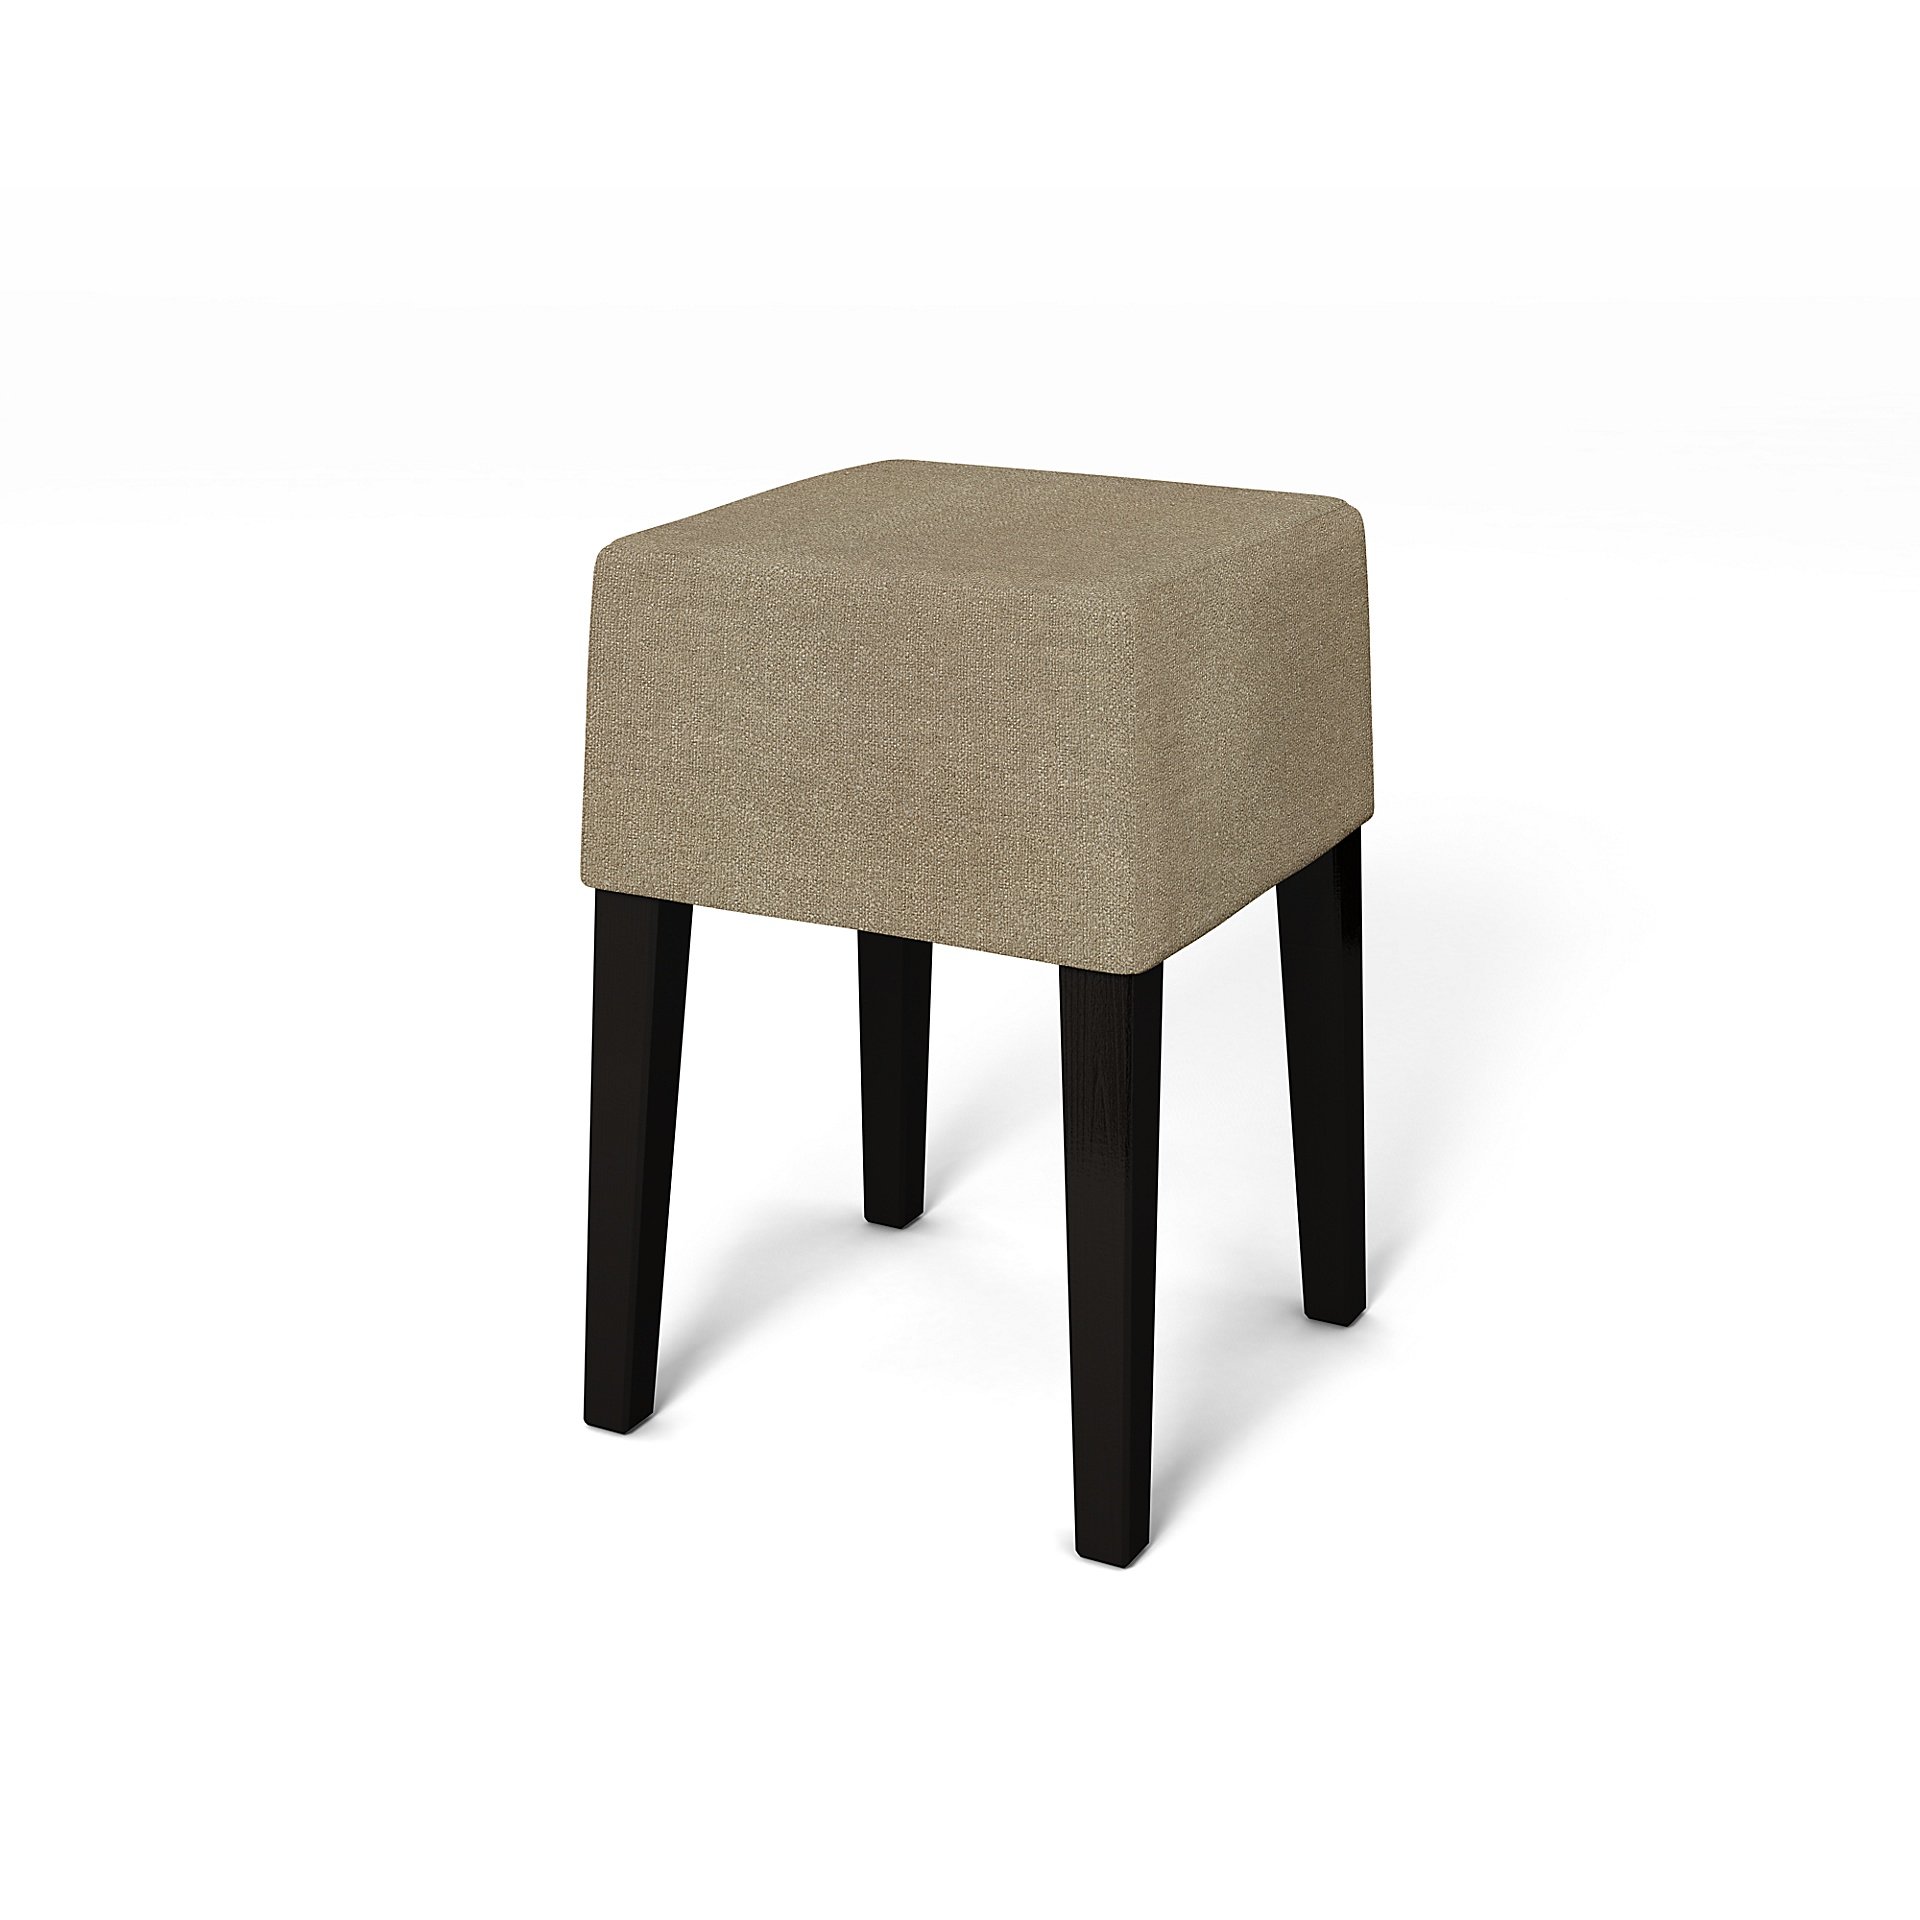 IKEA - Nils Stool Cover, Pebble, Boucle & Texture - Bemz